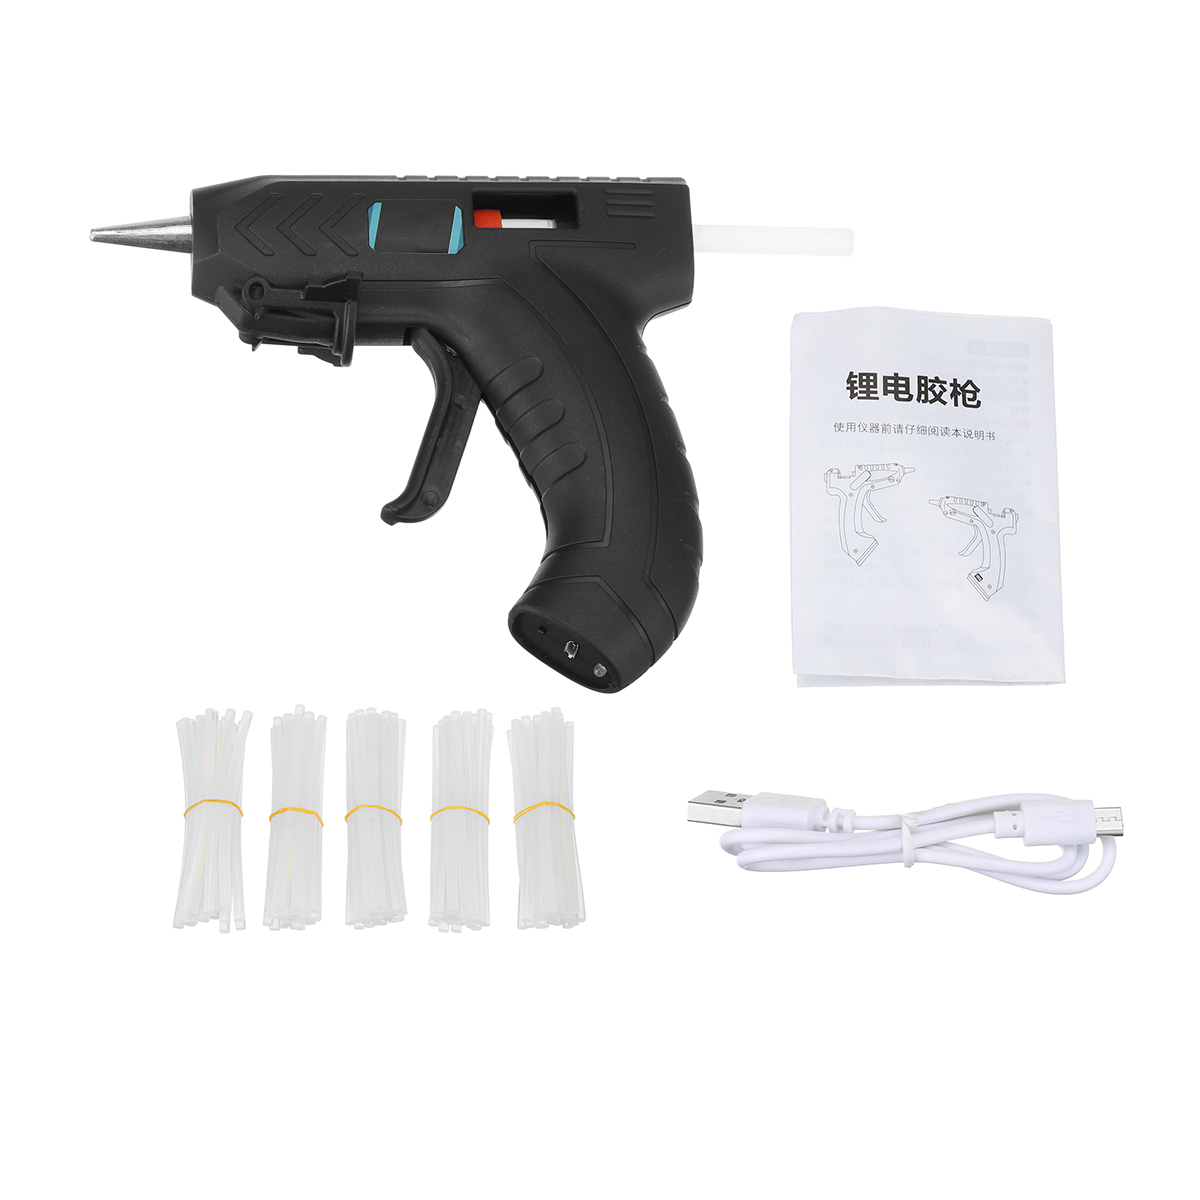 Find 3 6V Cordless DIY Hot Glue Guns 1800mAh Li ion Glue Hand Craft Power Tool W/ 10/40/100pcs Glue Sticks for Sale on Gipsybee.com with cryptocurrencies